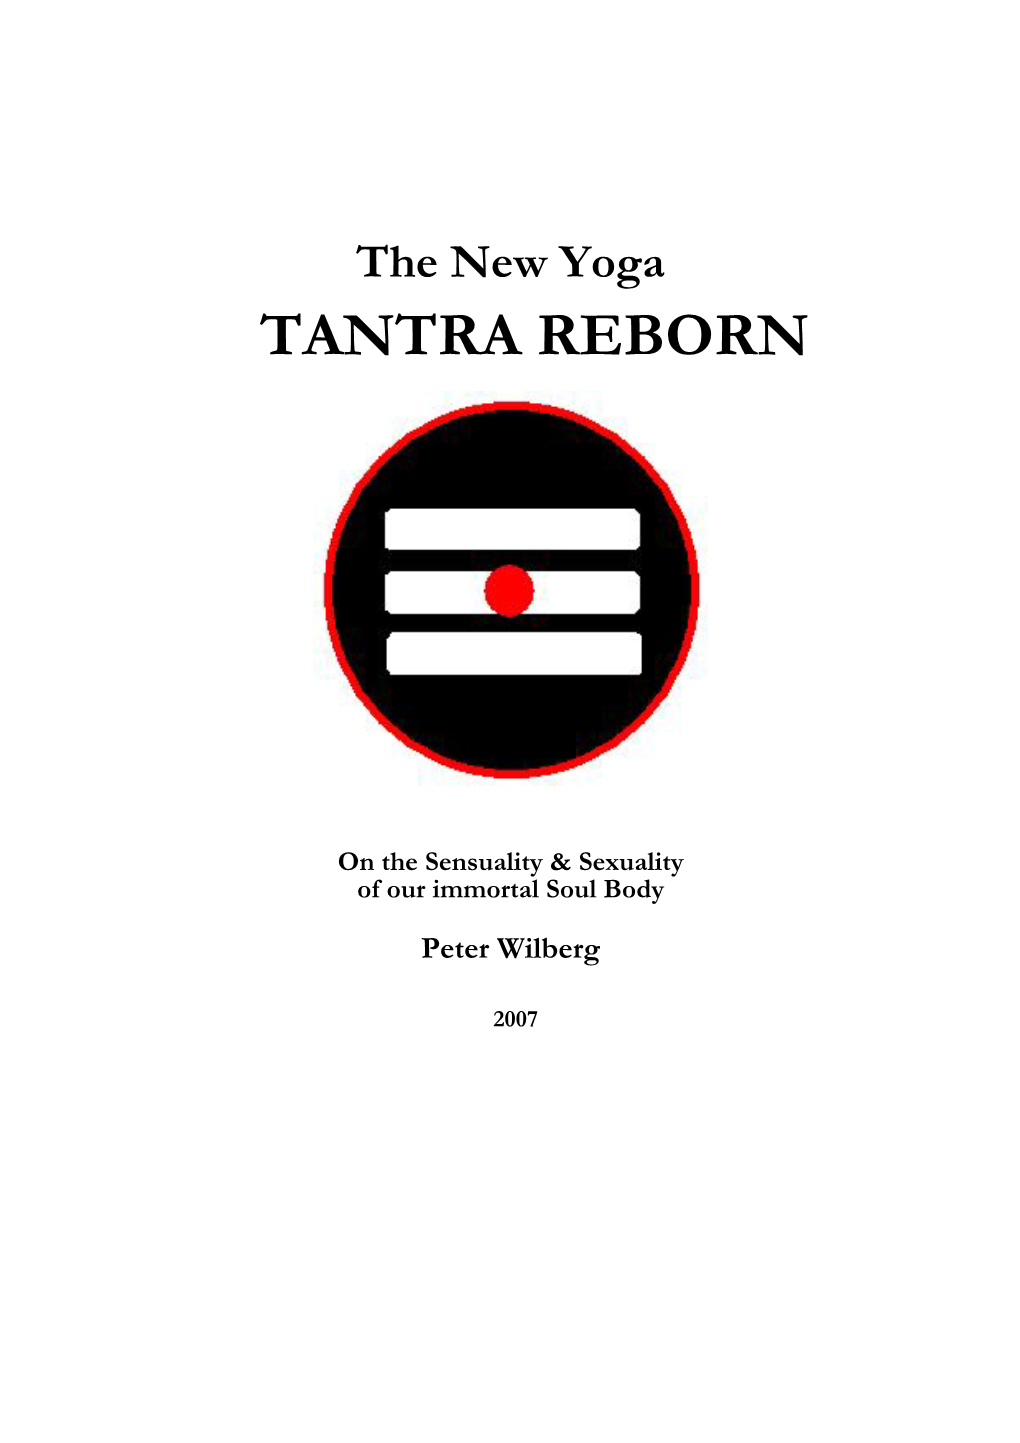 Tantra Reborn